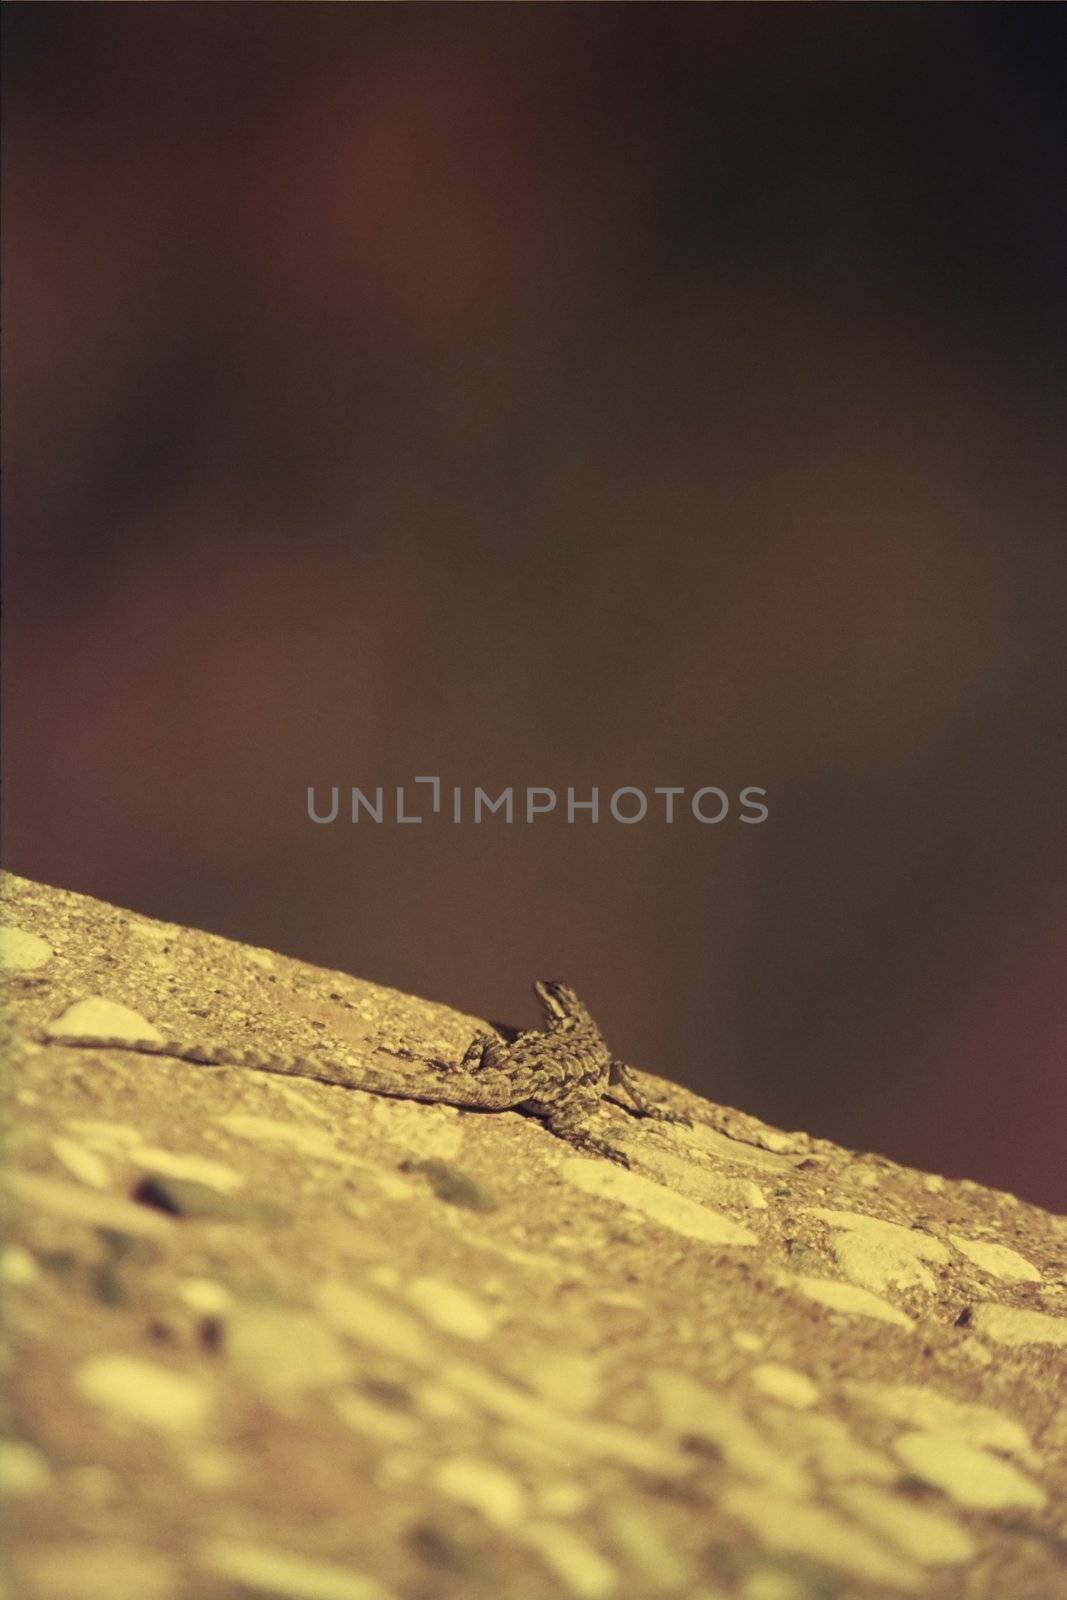 Lizard by timscottrom